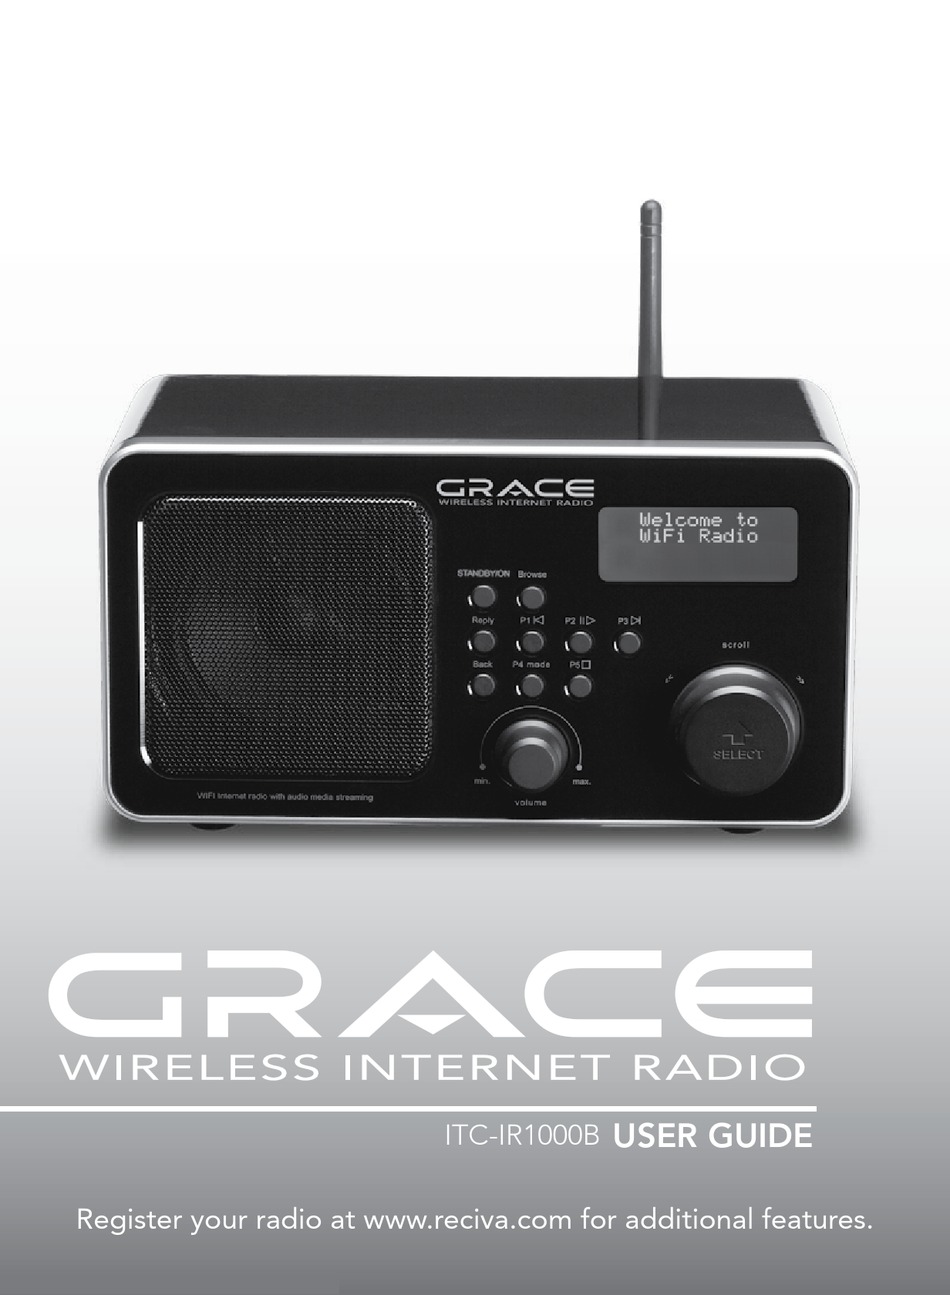 Grace ITC-IR1000 Wireless Internet Radio review: Grace ITC-IR1000